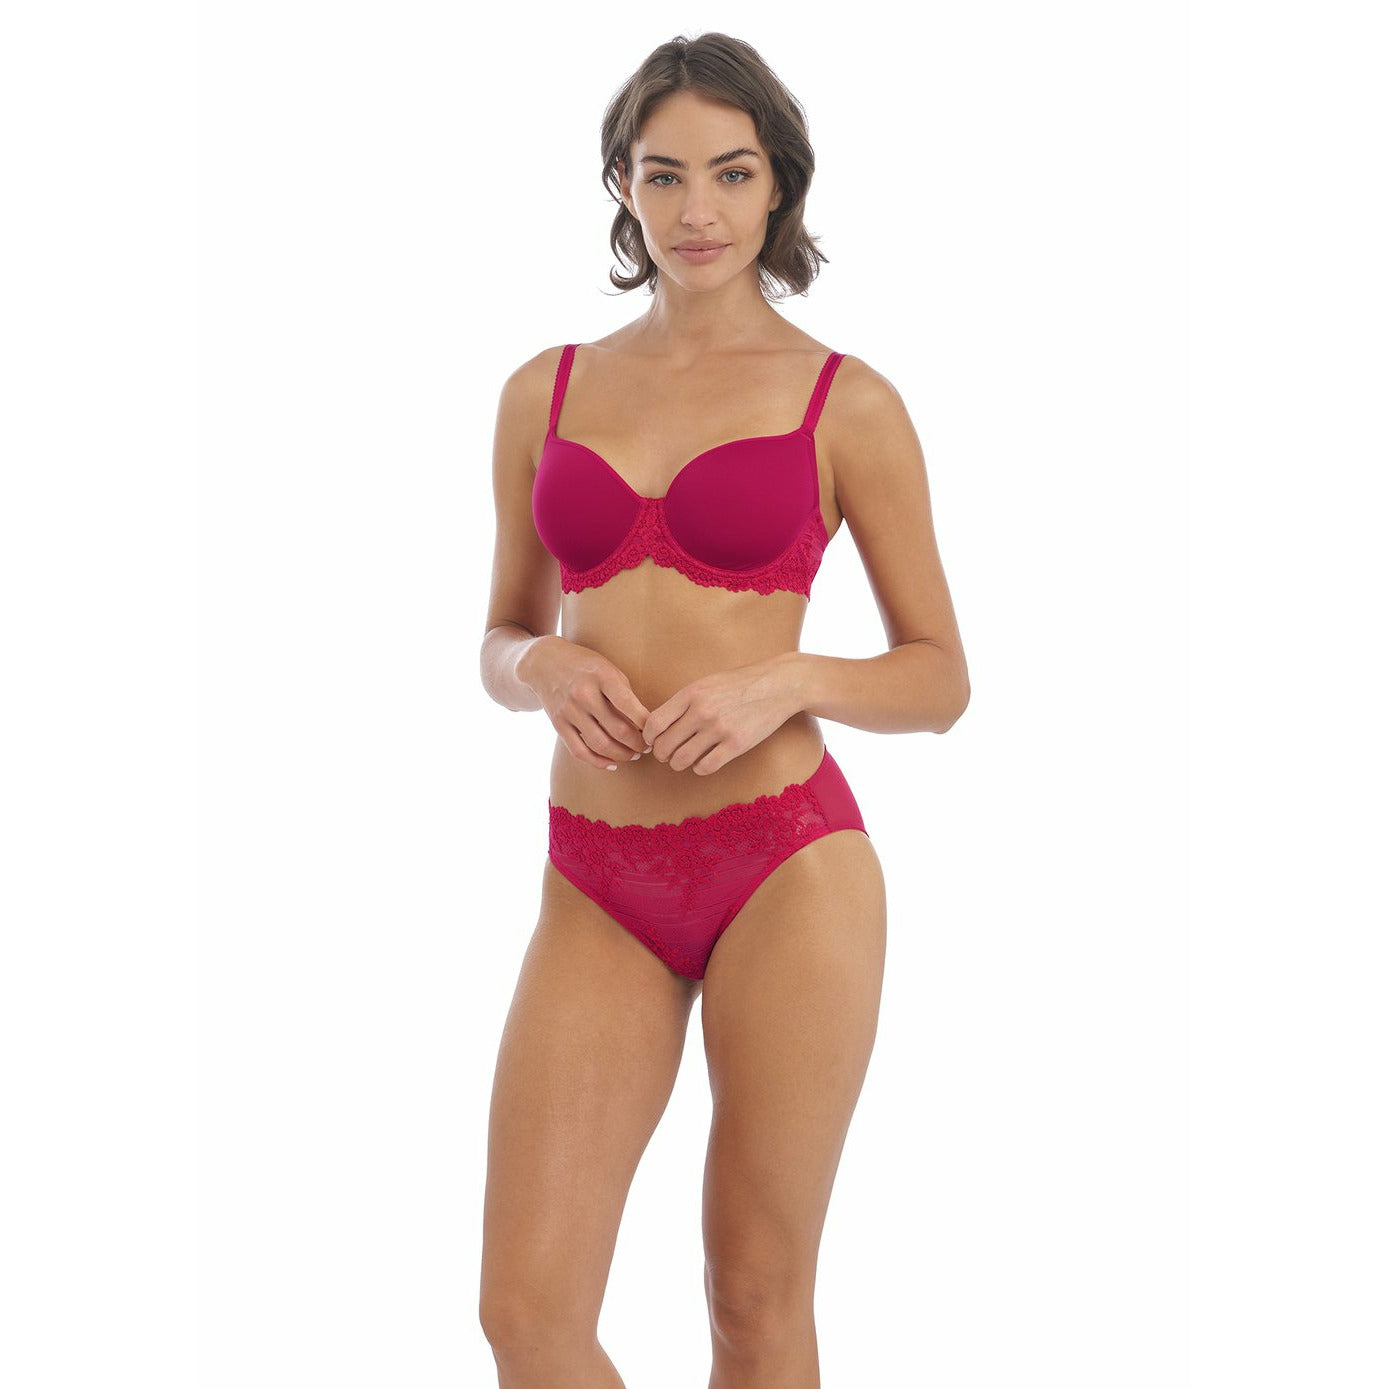 Wacoal Embrace Lace Bikini Brief - Persian Red